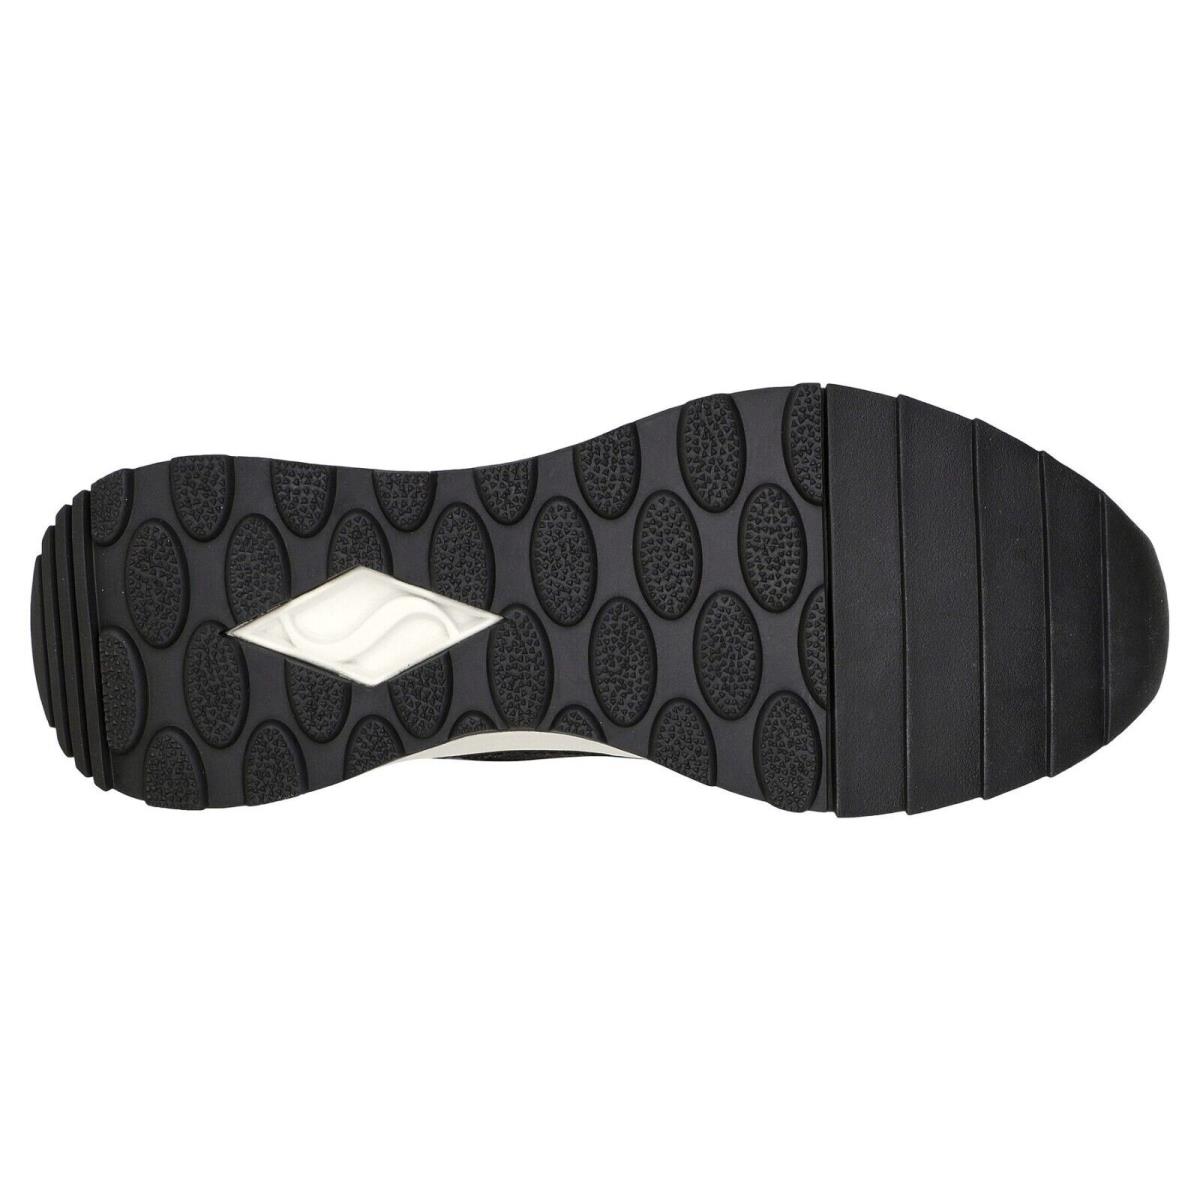 Skechers shoes Sunny Street - Black 1